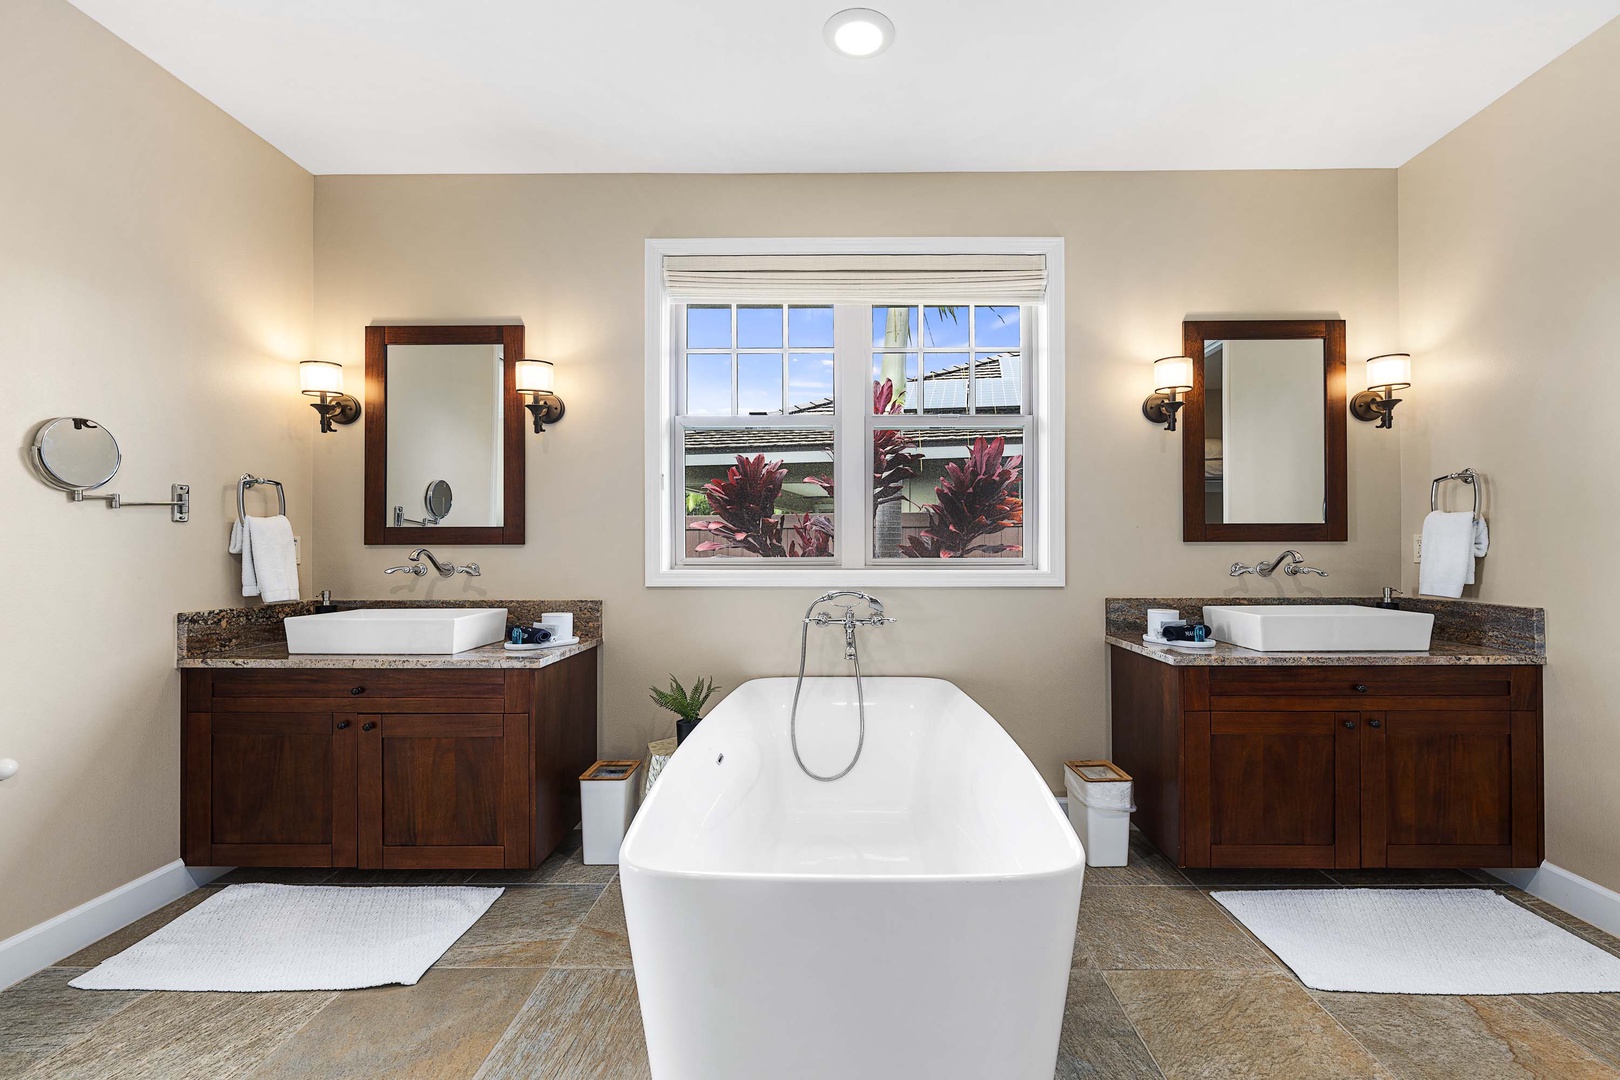 Kailua Kona Vacation Rentals, Holua Kai #27 - Luxurious primary bathroom with oversized soaking tub